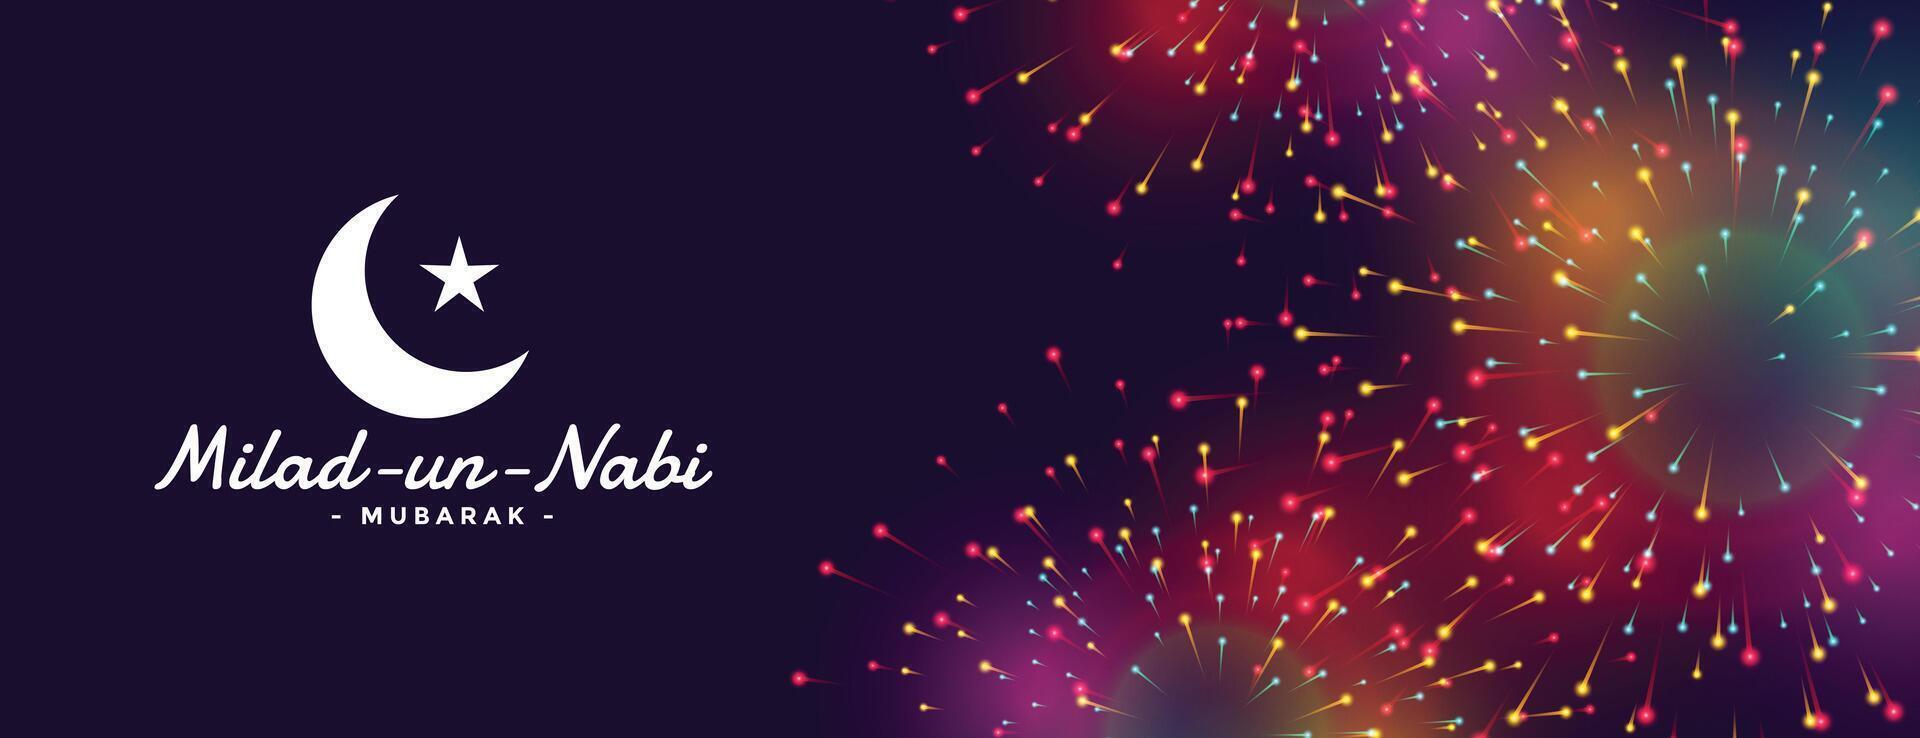 milad un nabi banner with fireworks design vector